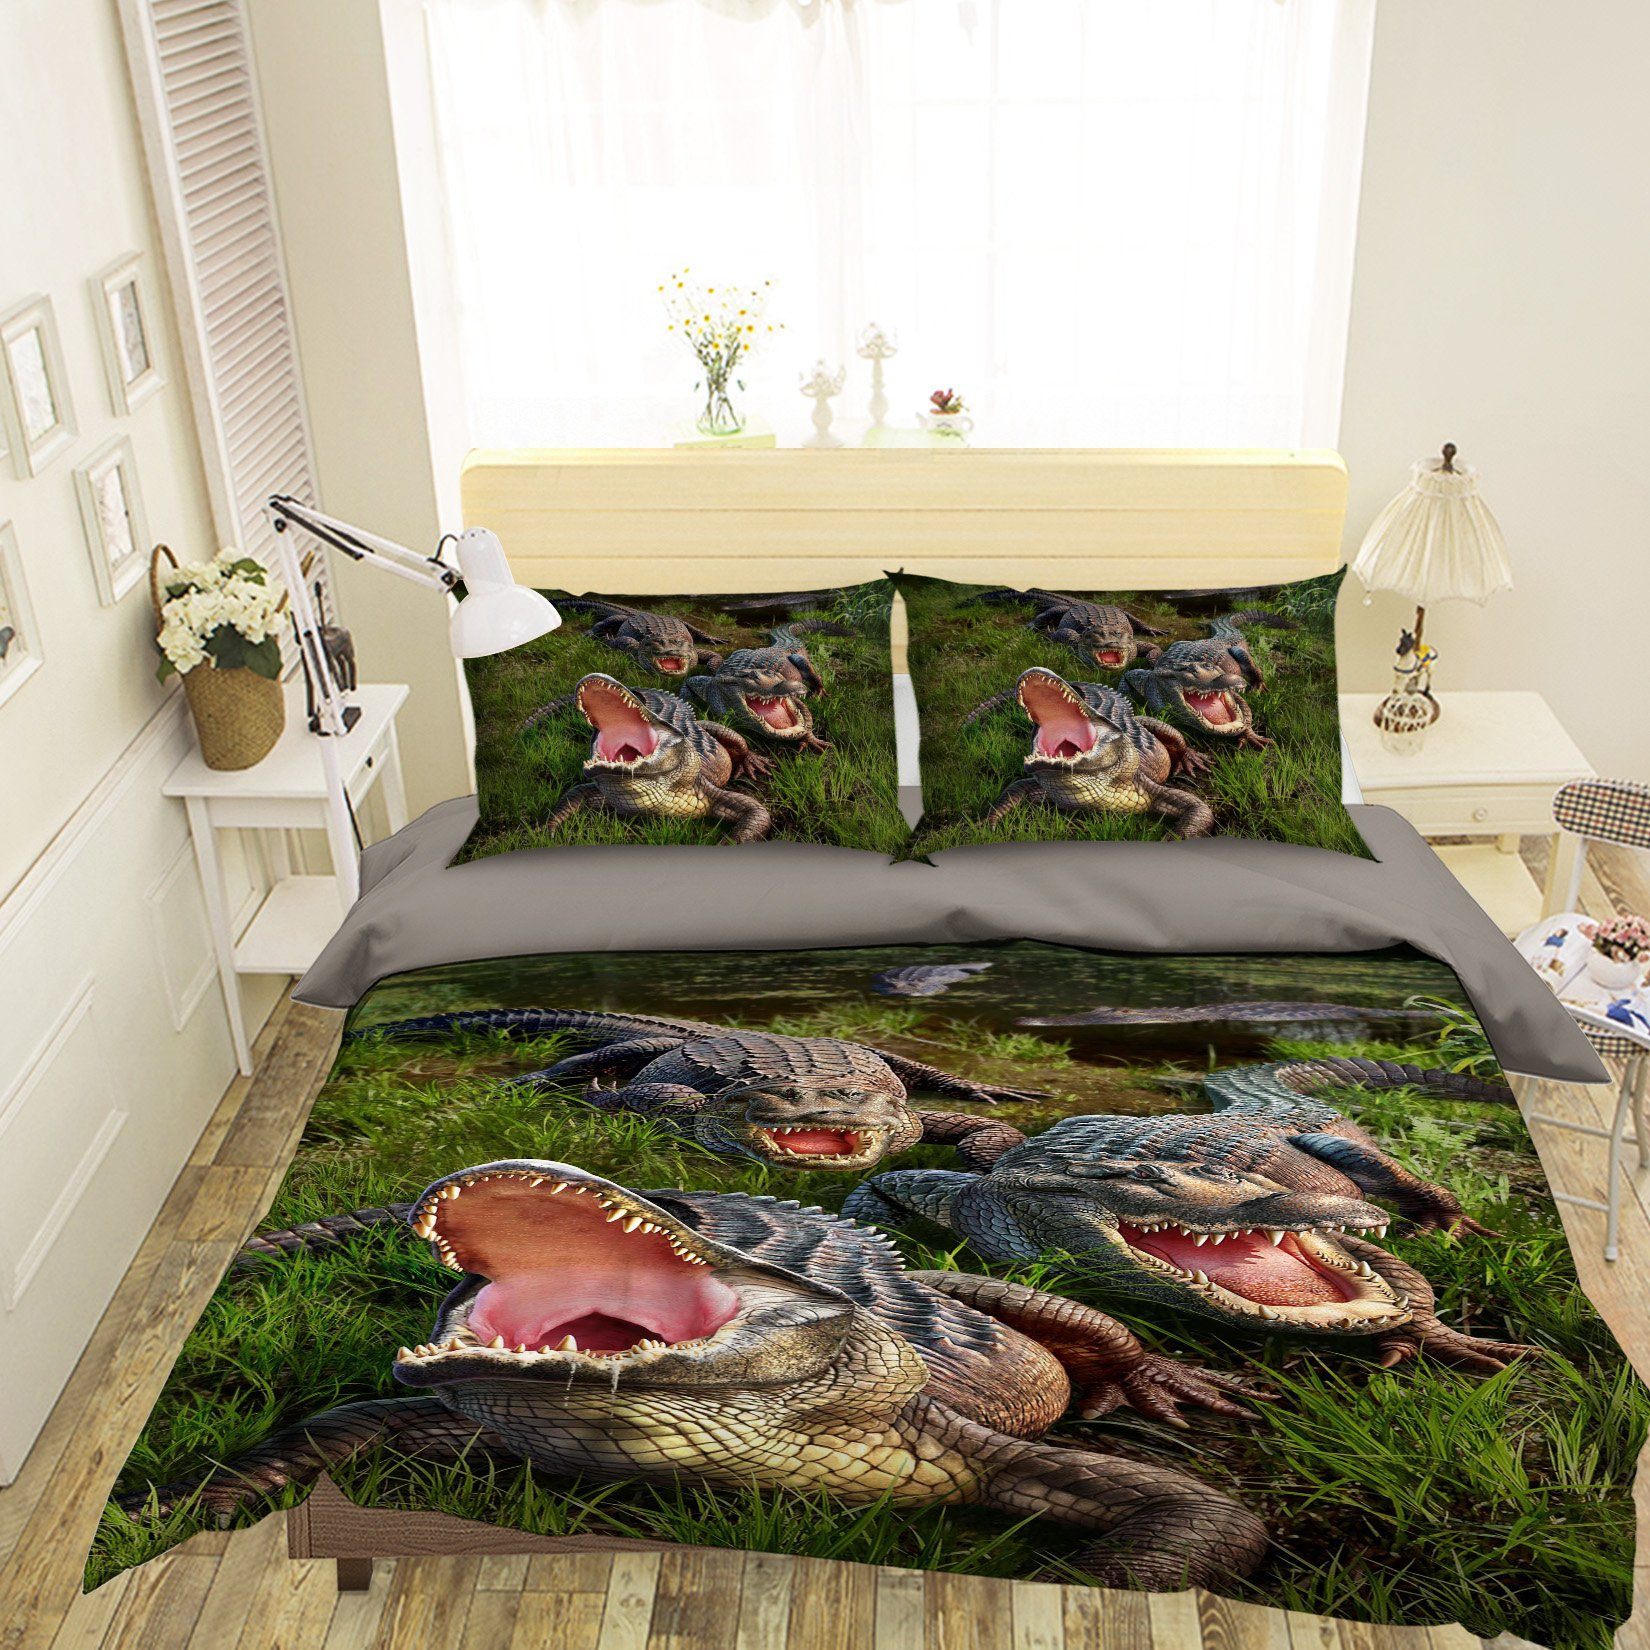 3D Alligators 2111 Jerry LoFaro bedding Bed Pillowcases Quilt Quiet Covers AJ Creativity Home 